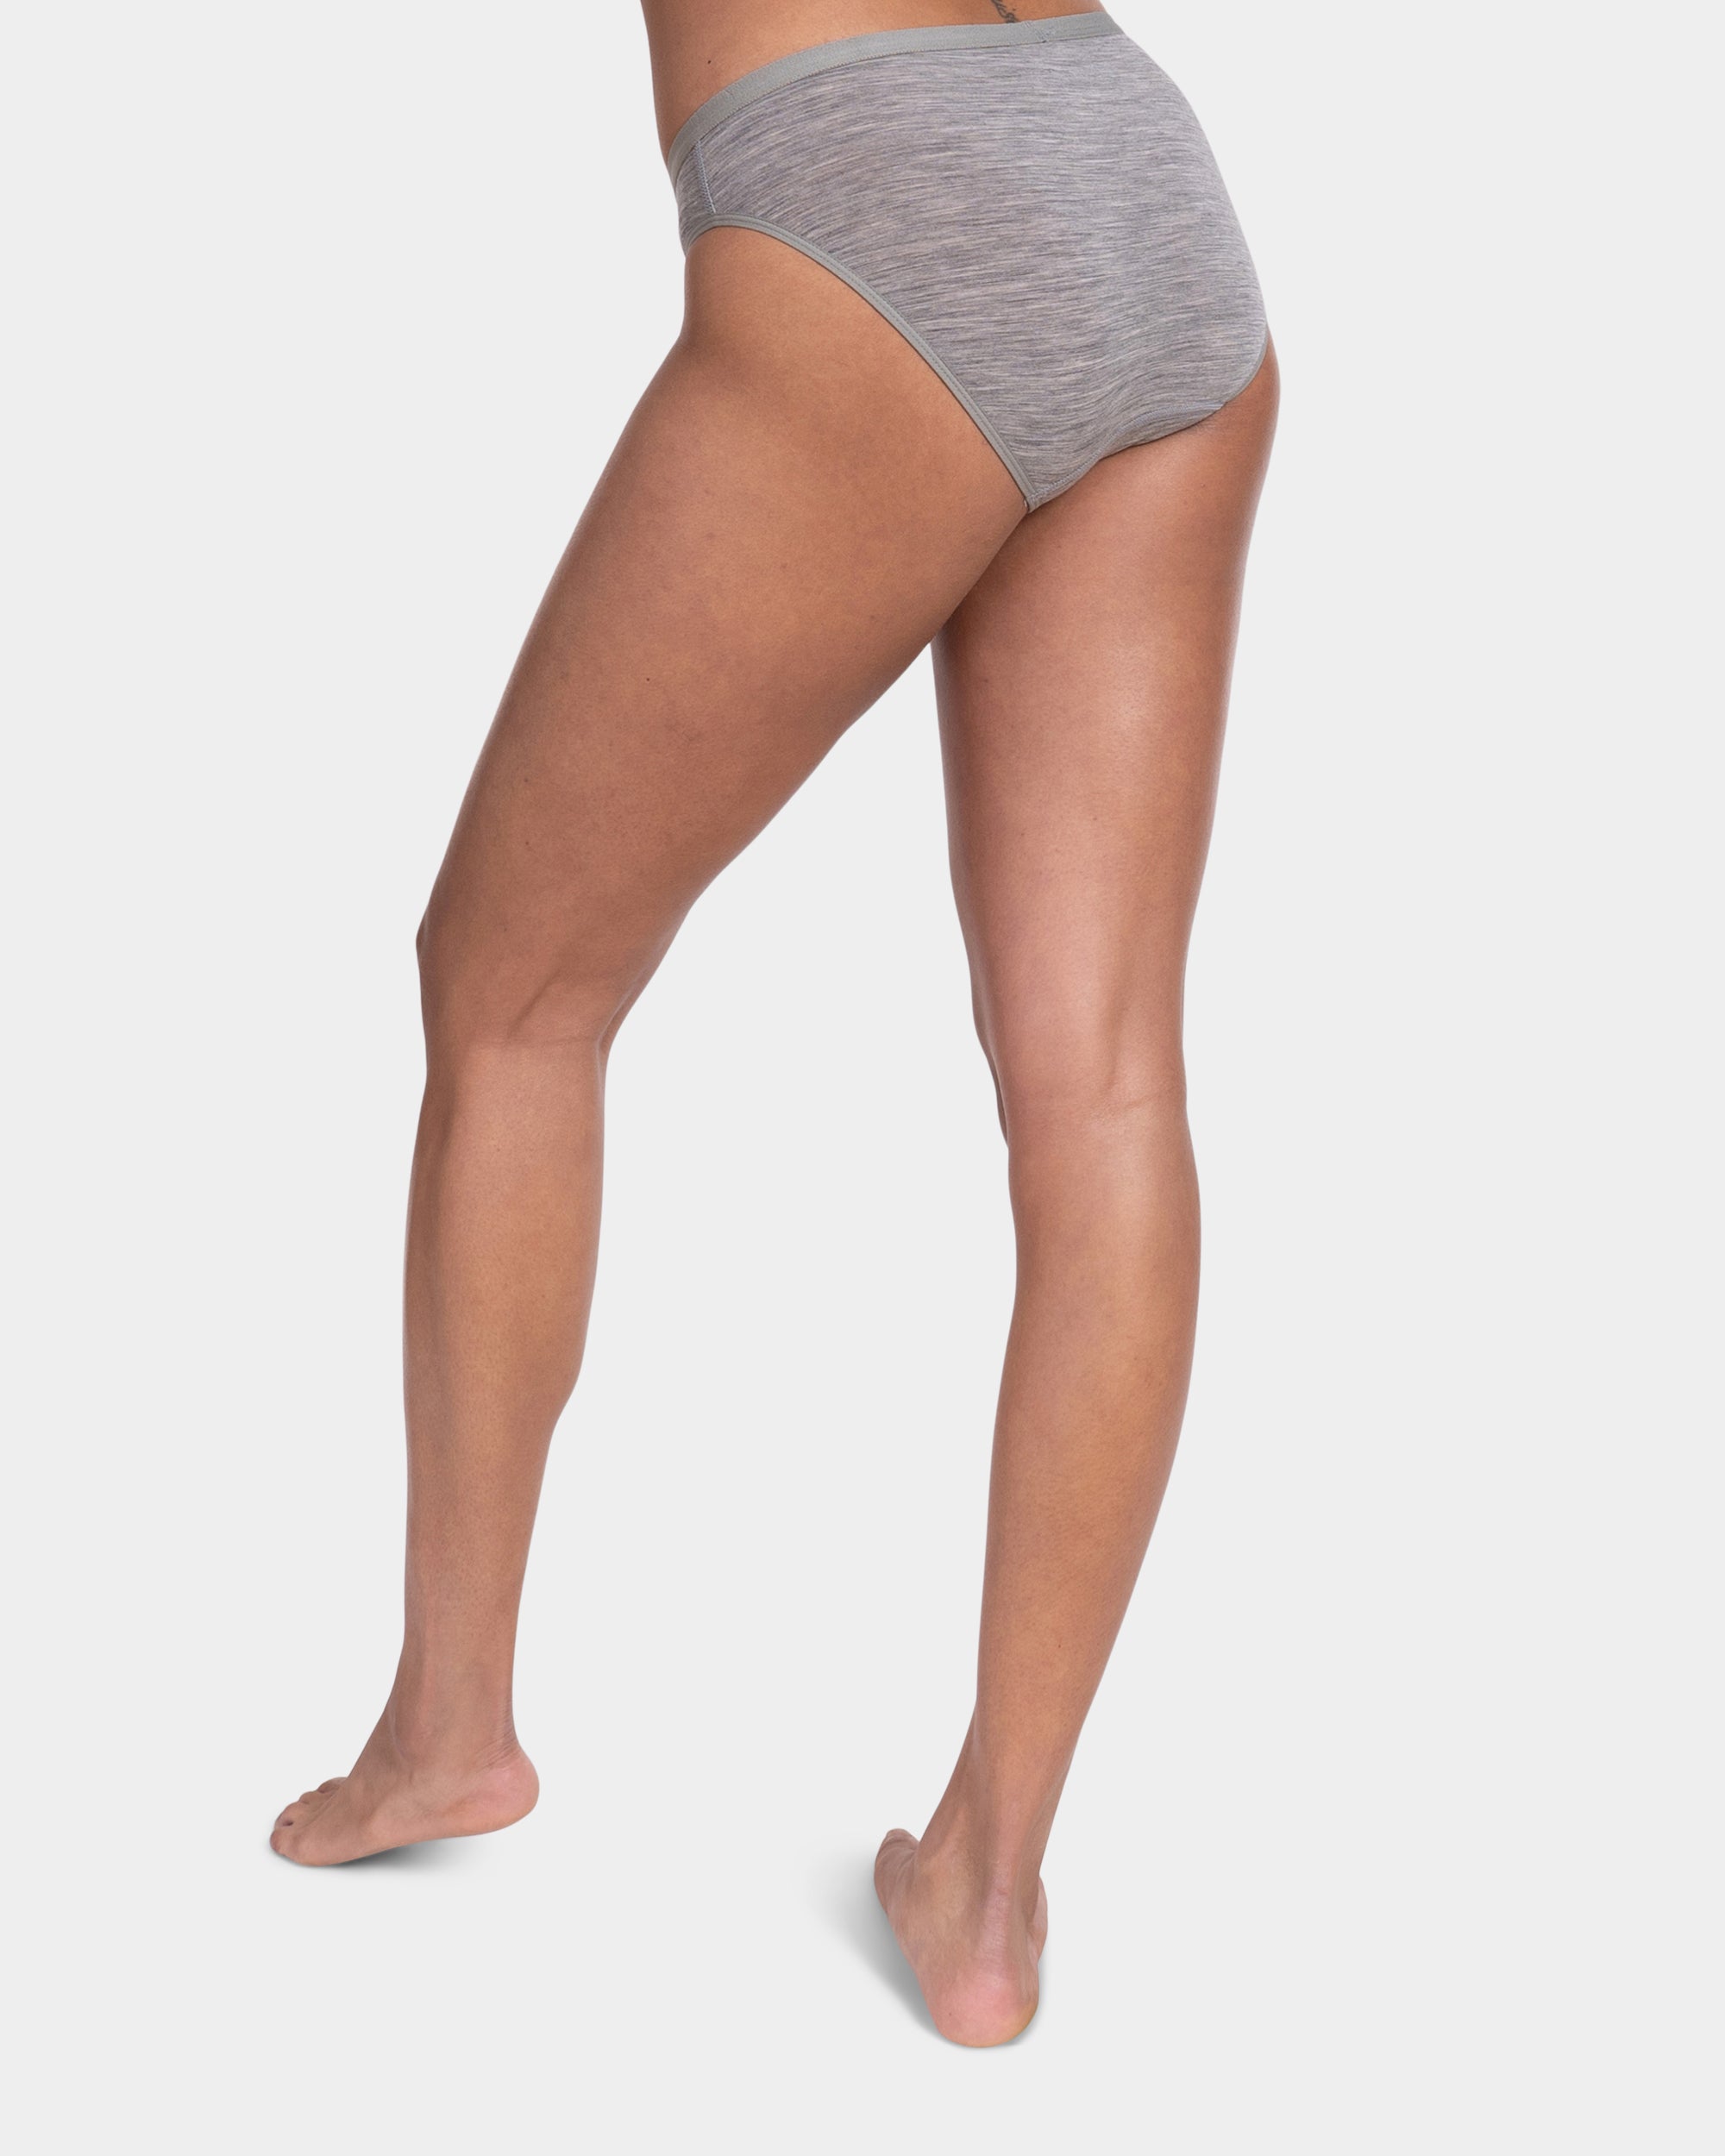 Metarino 2 Pack Women's Athletic Underwear Panties Soft Merino Wool Sports  Active Briefs,Medium 